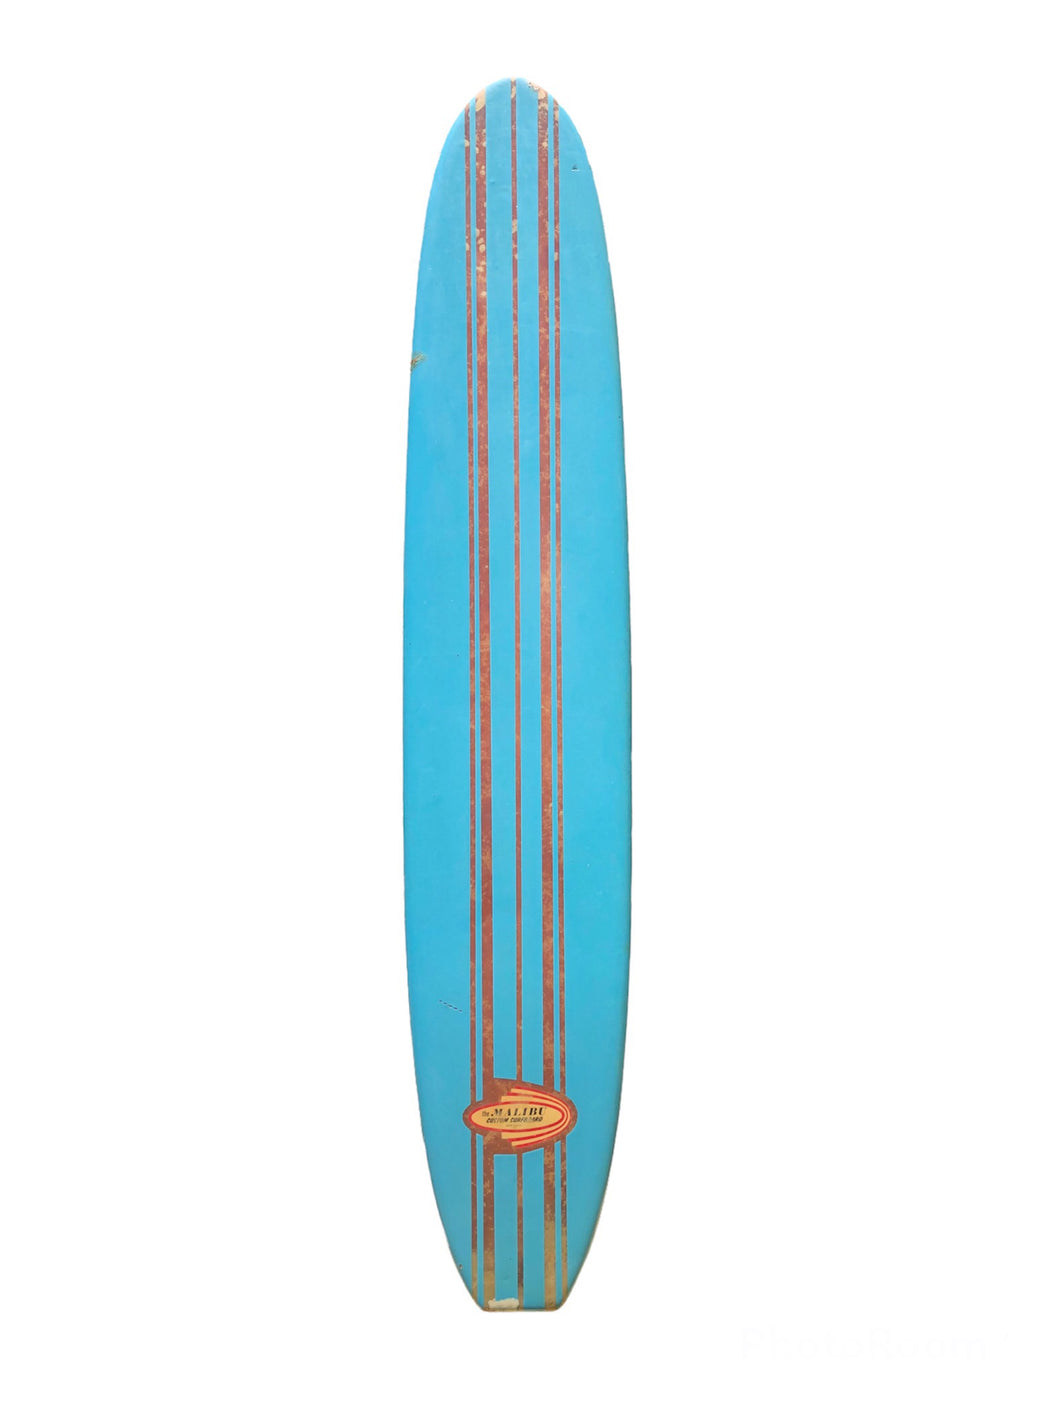 classic Malibu long board